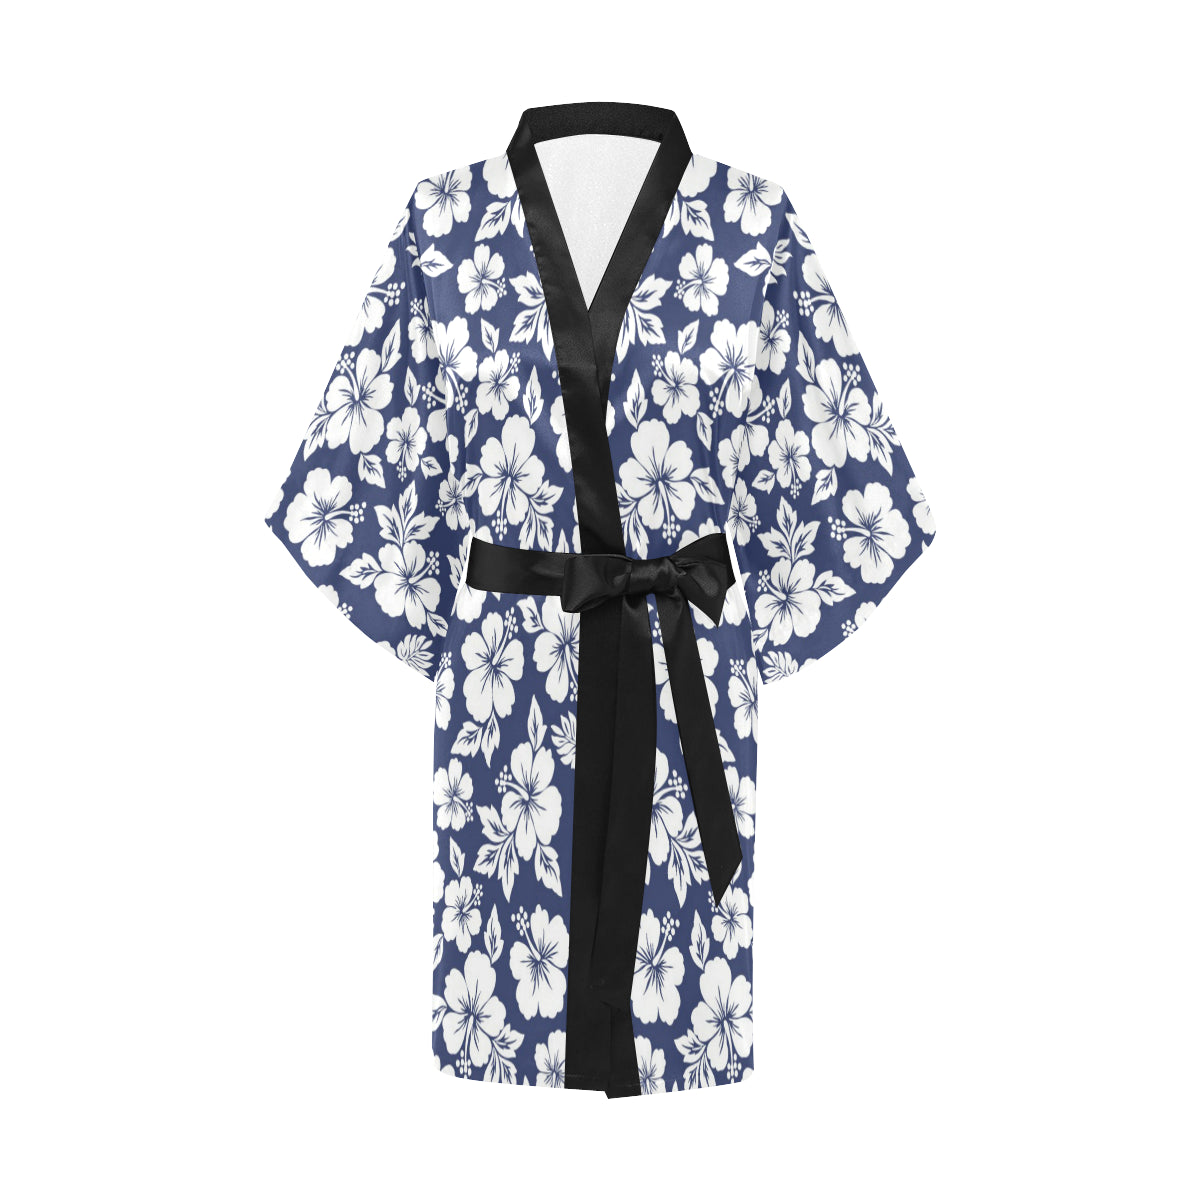 Hibiscus Pattern Print Design HB012 Women's Short Kimono